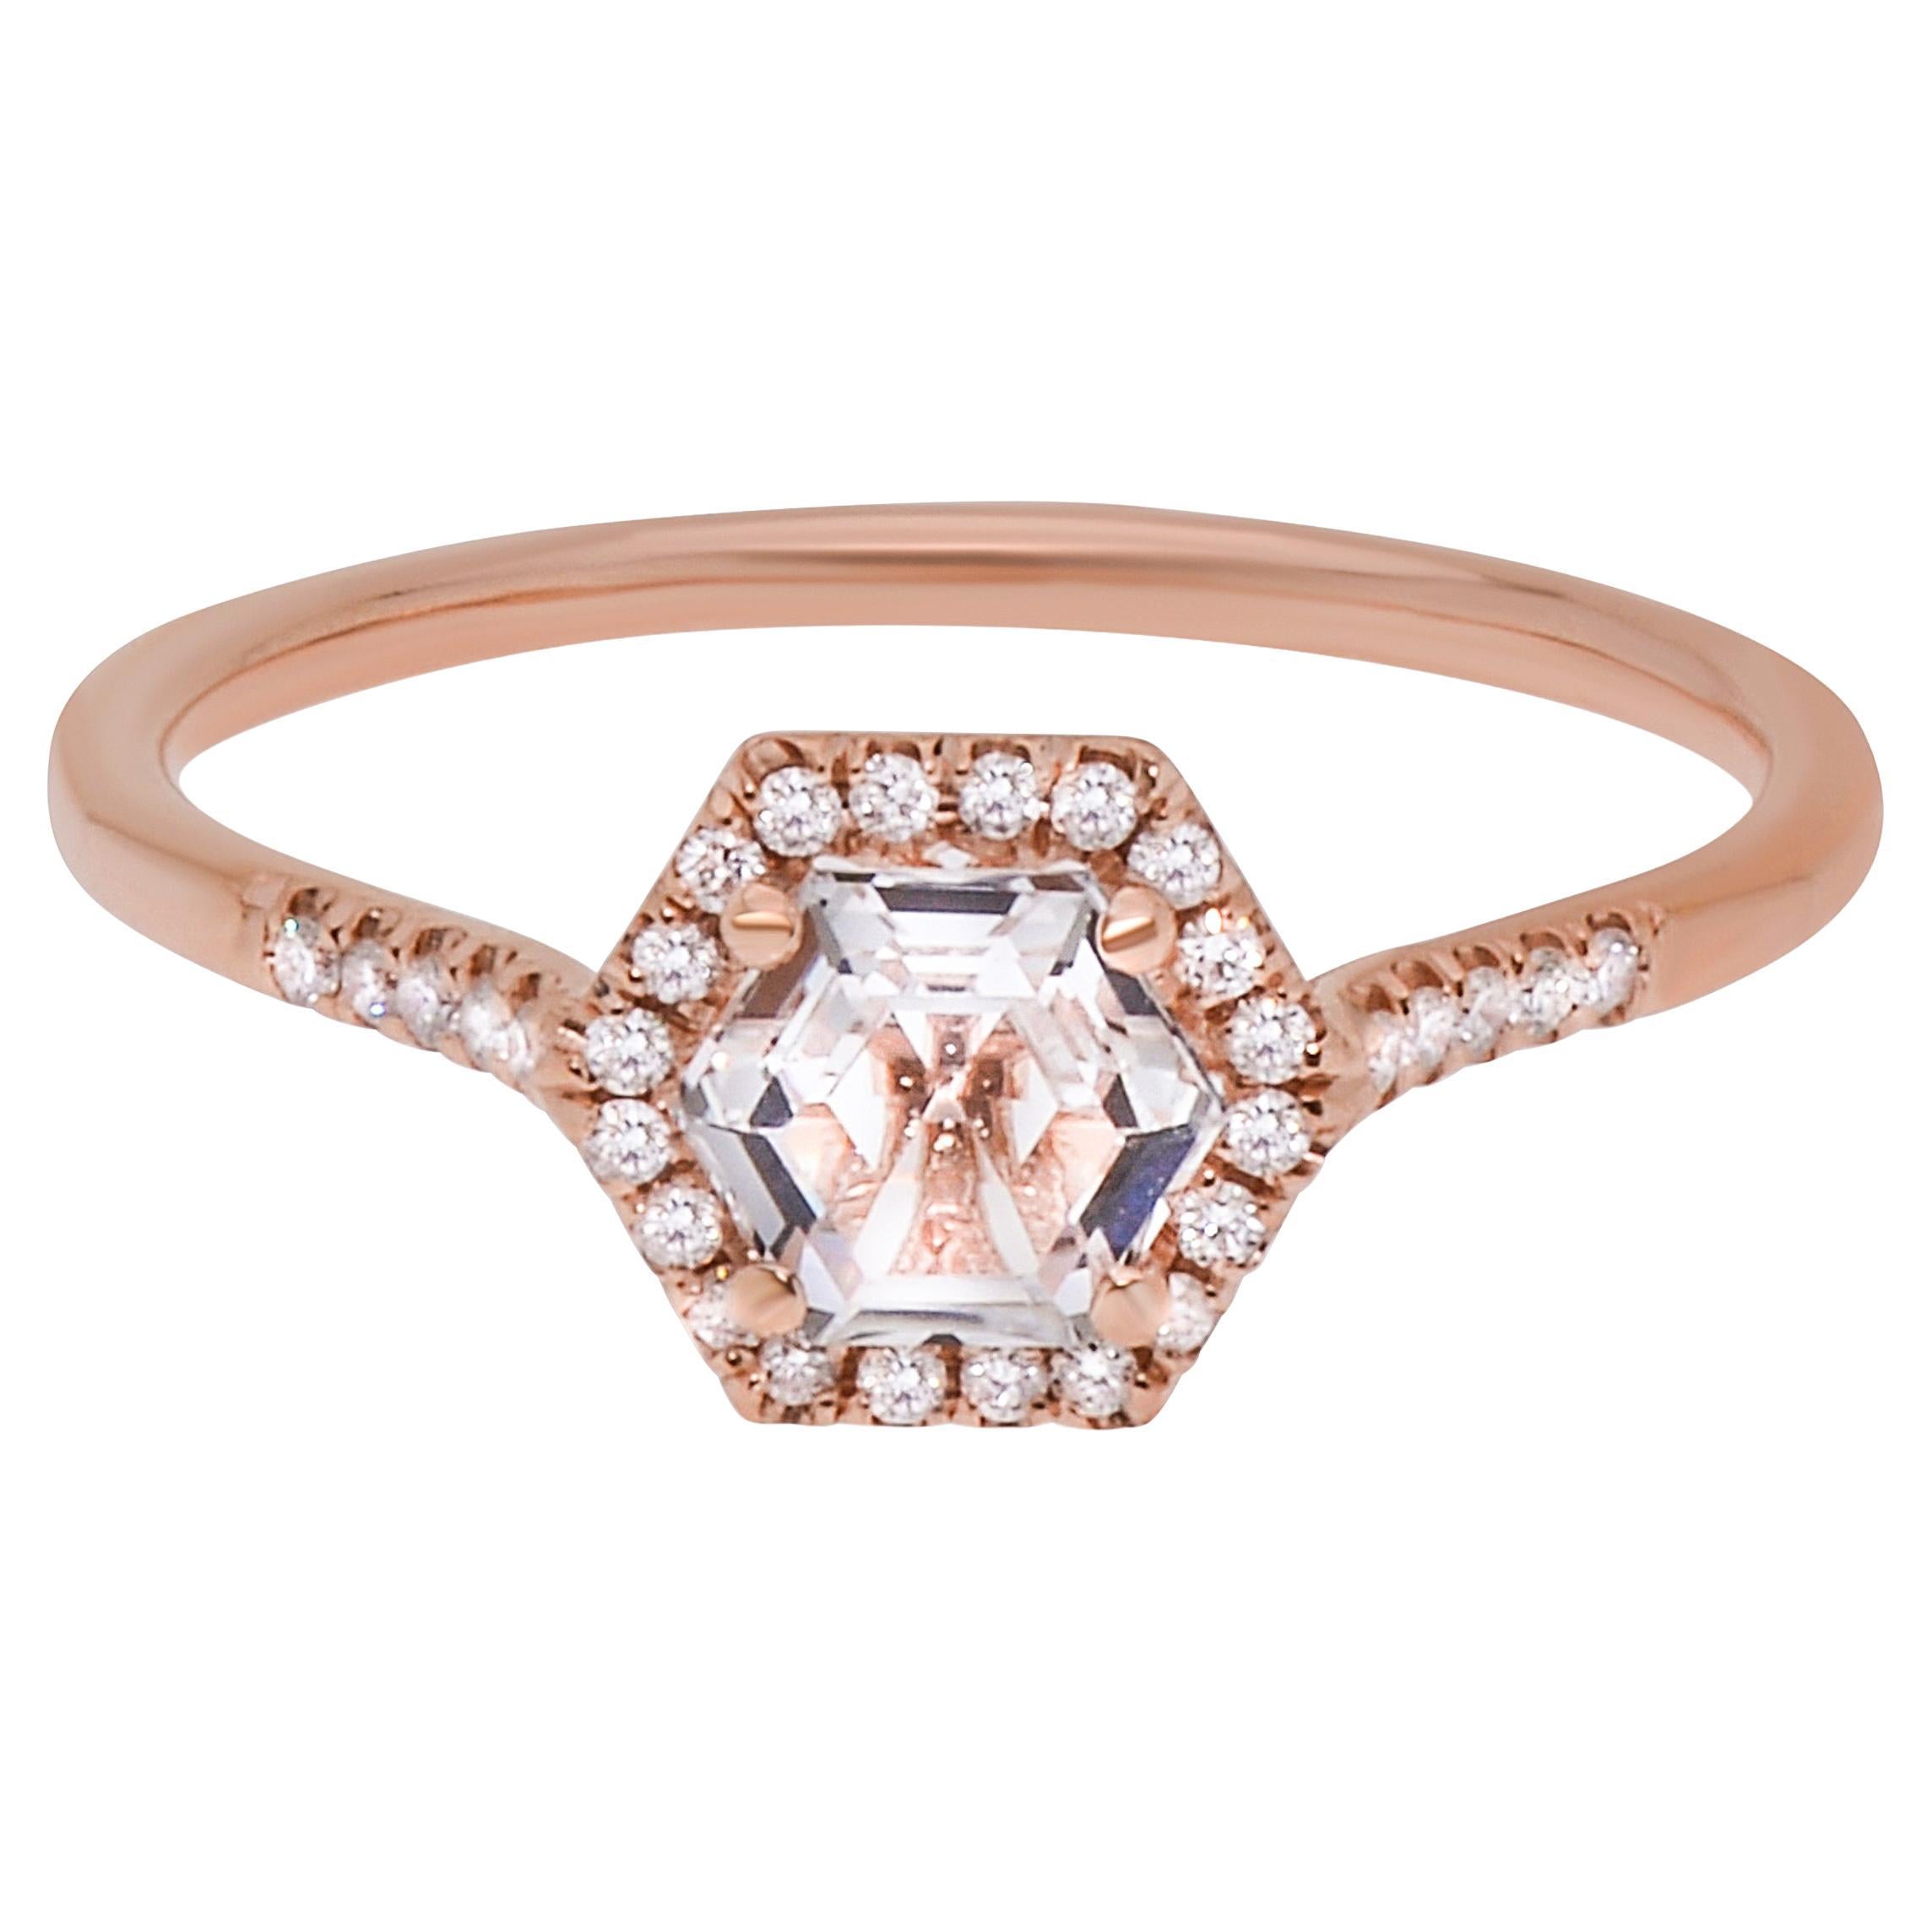 Suzanne Kalan 14K Rose Gold Diamond Topaz Ring sz 6.25 For Sale